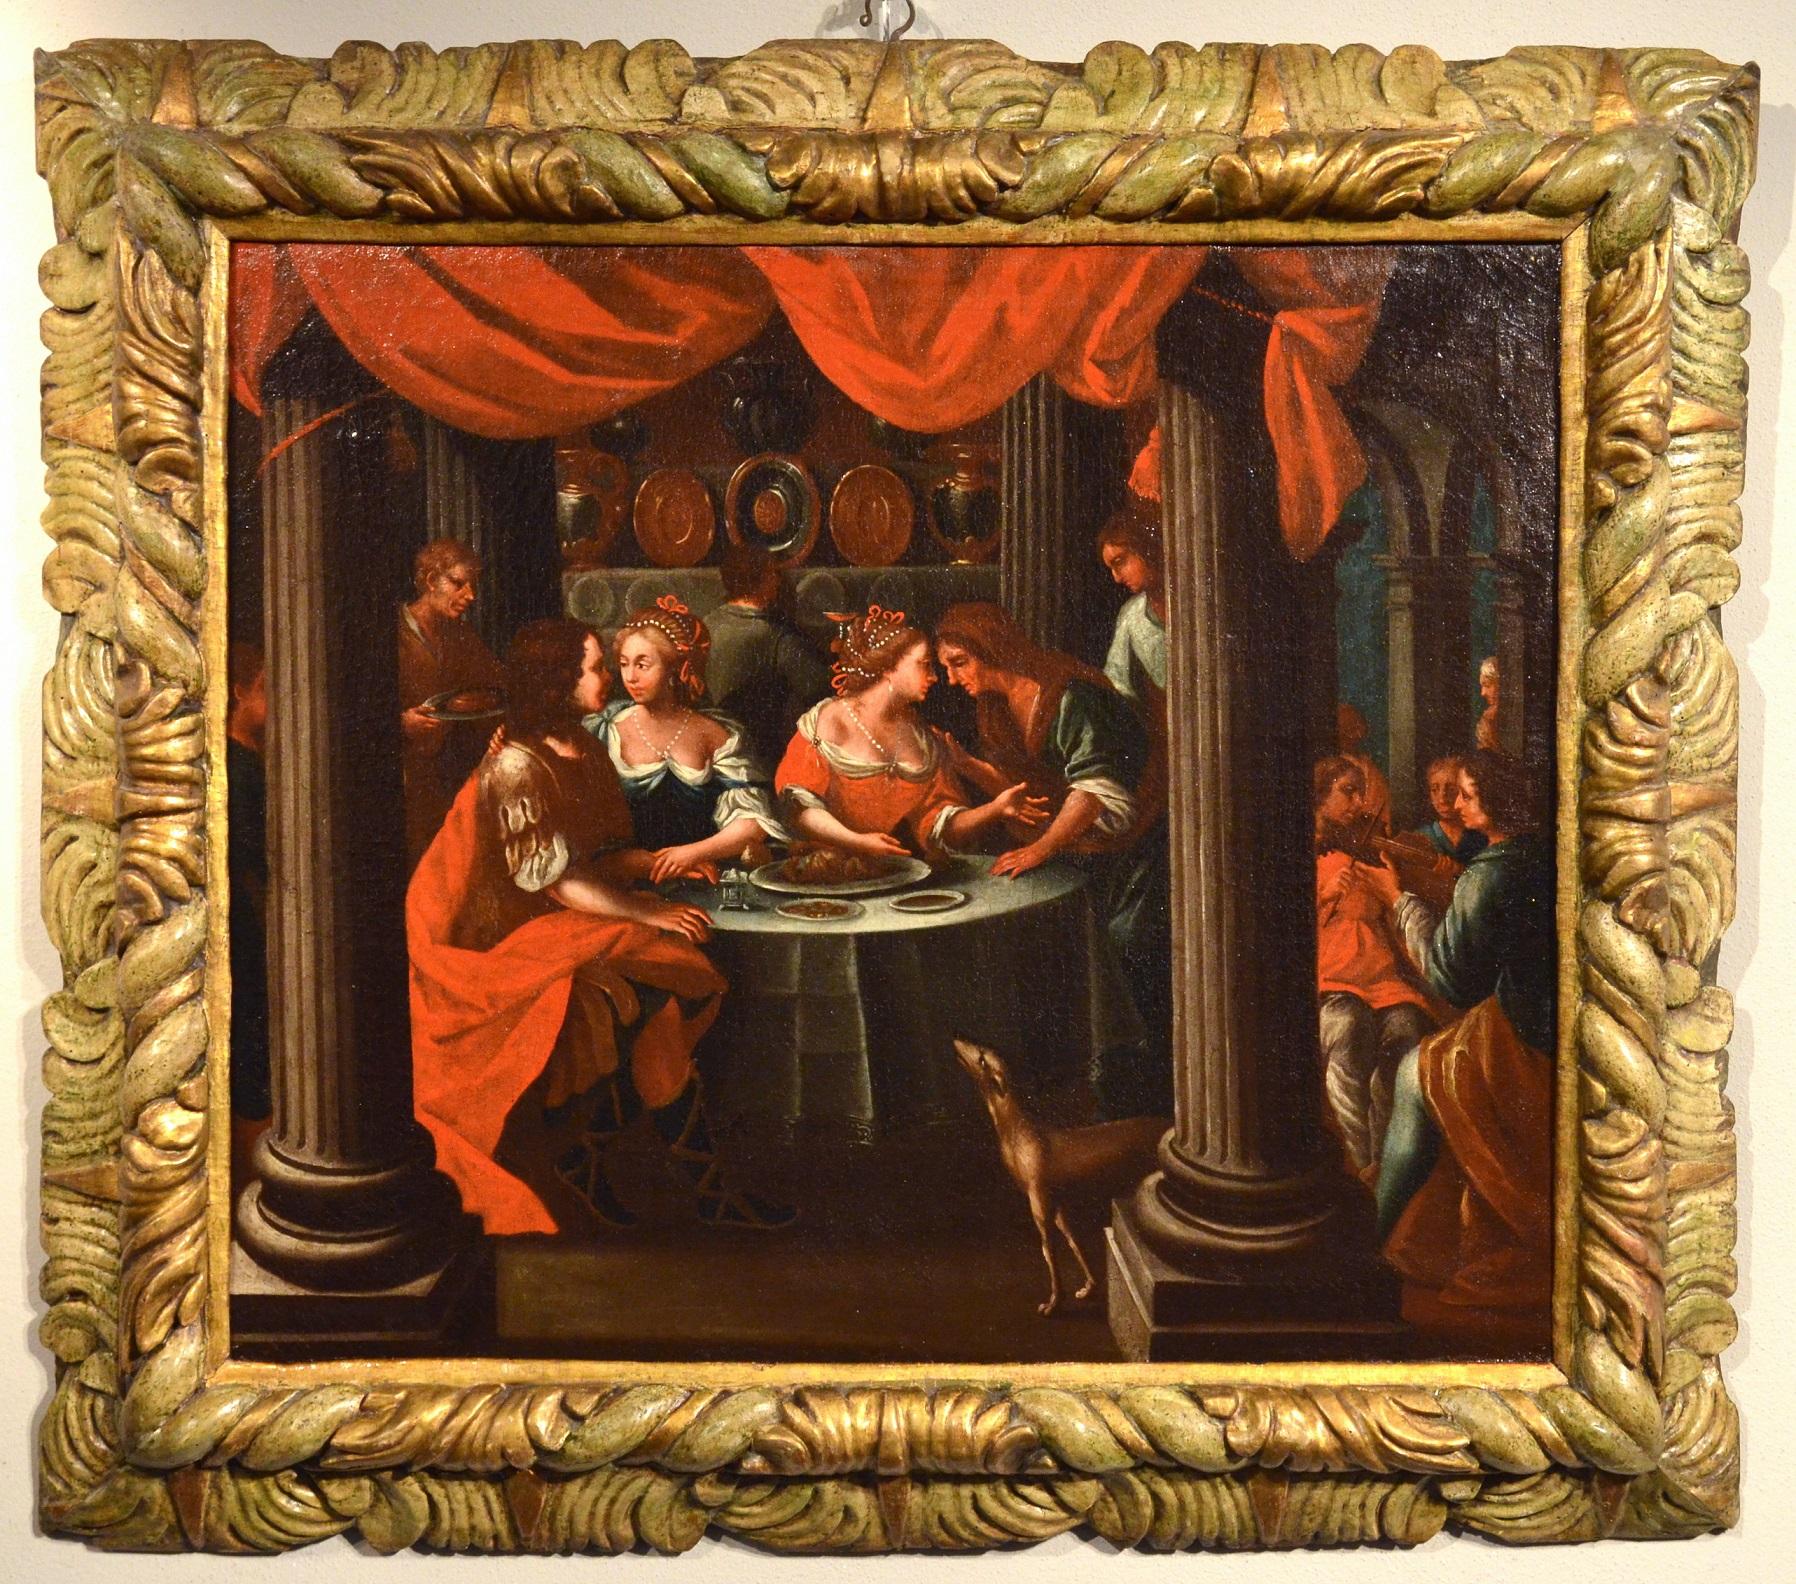 Bankett Flemish Italienische Malerei Öl auf Leinwand Altmeister 17. Jahrhundert Veronese Kunst